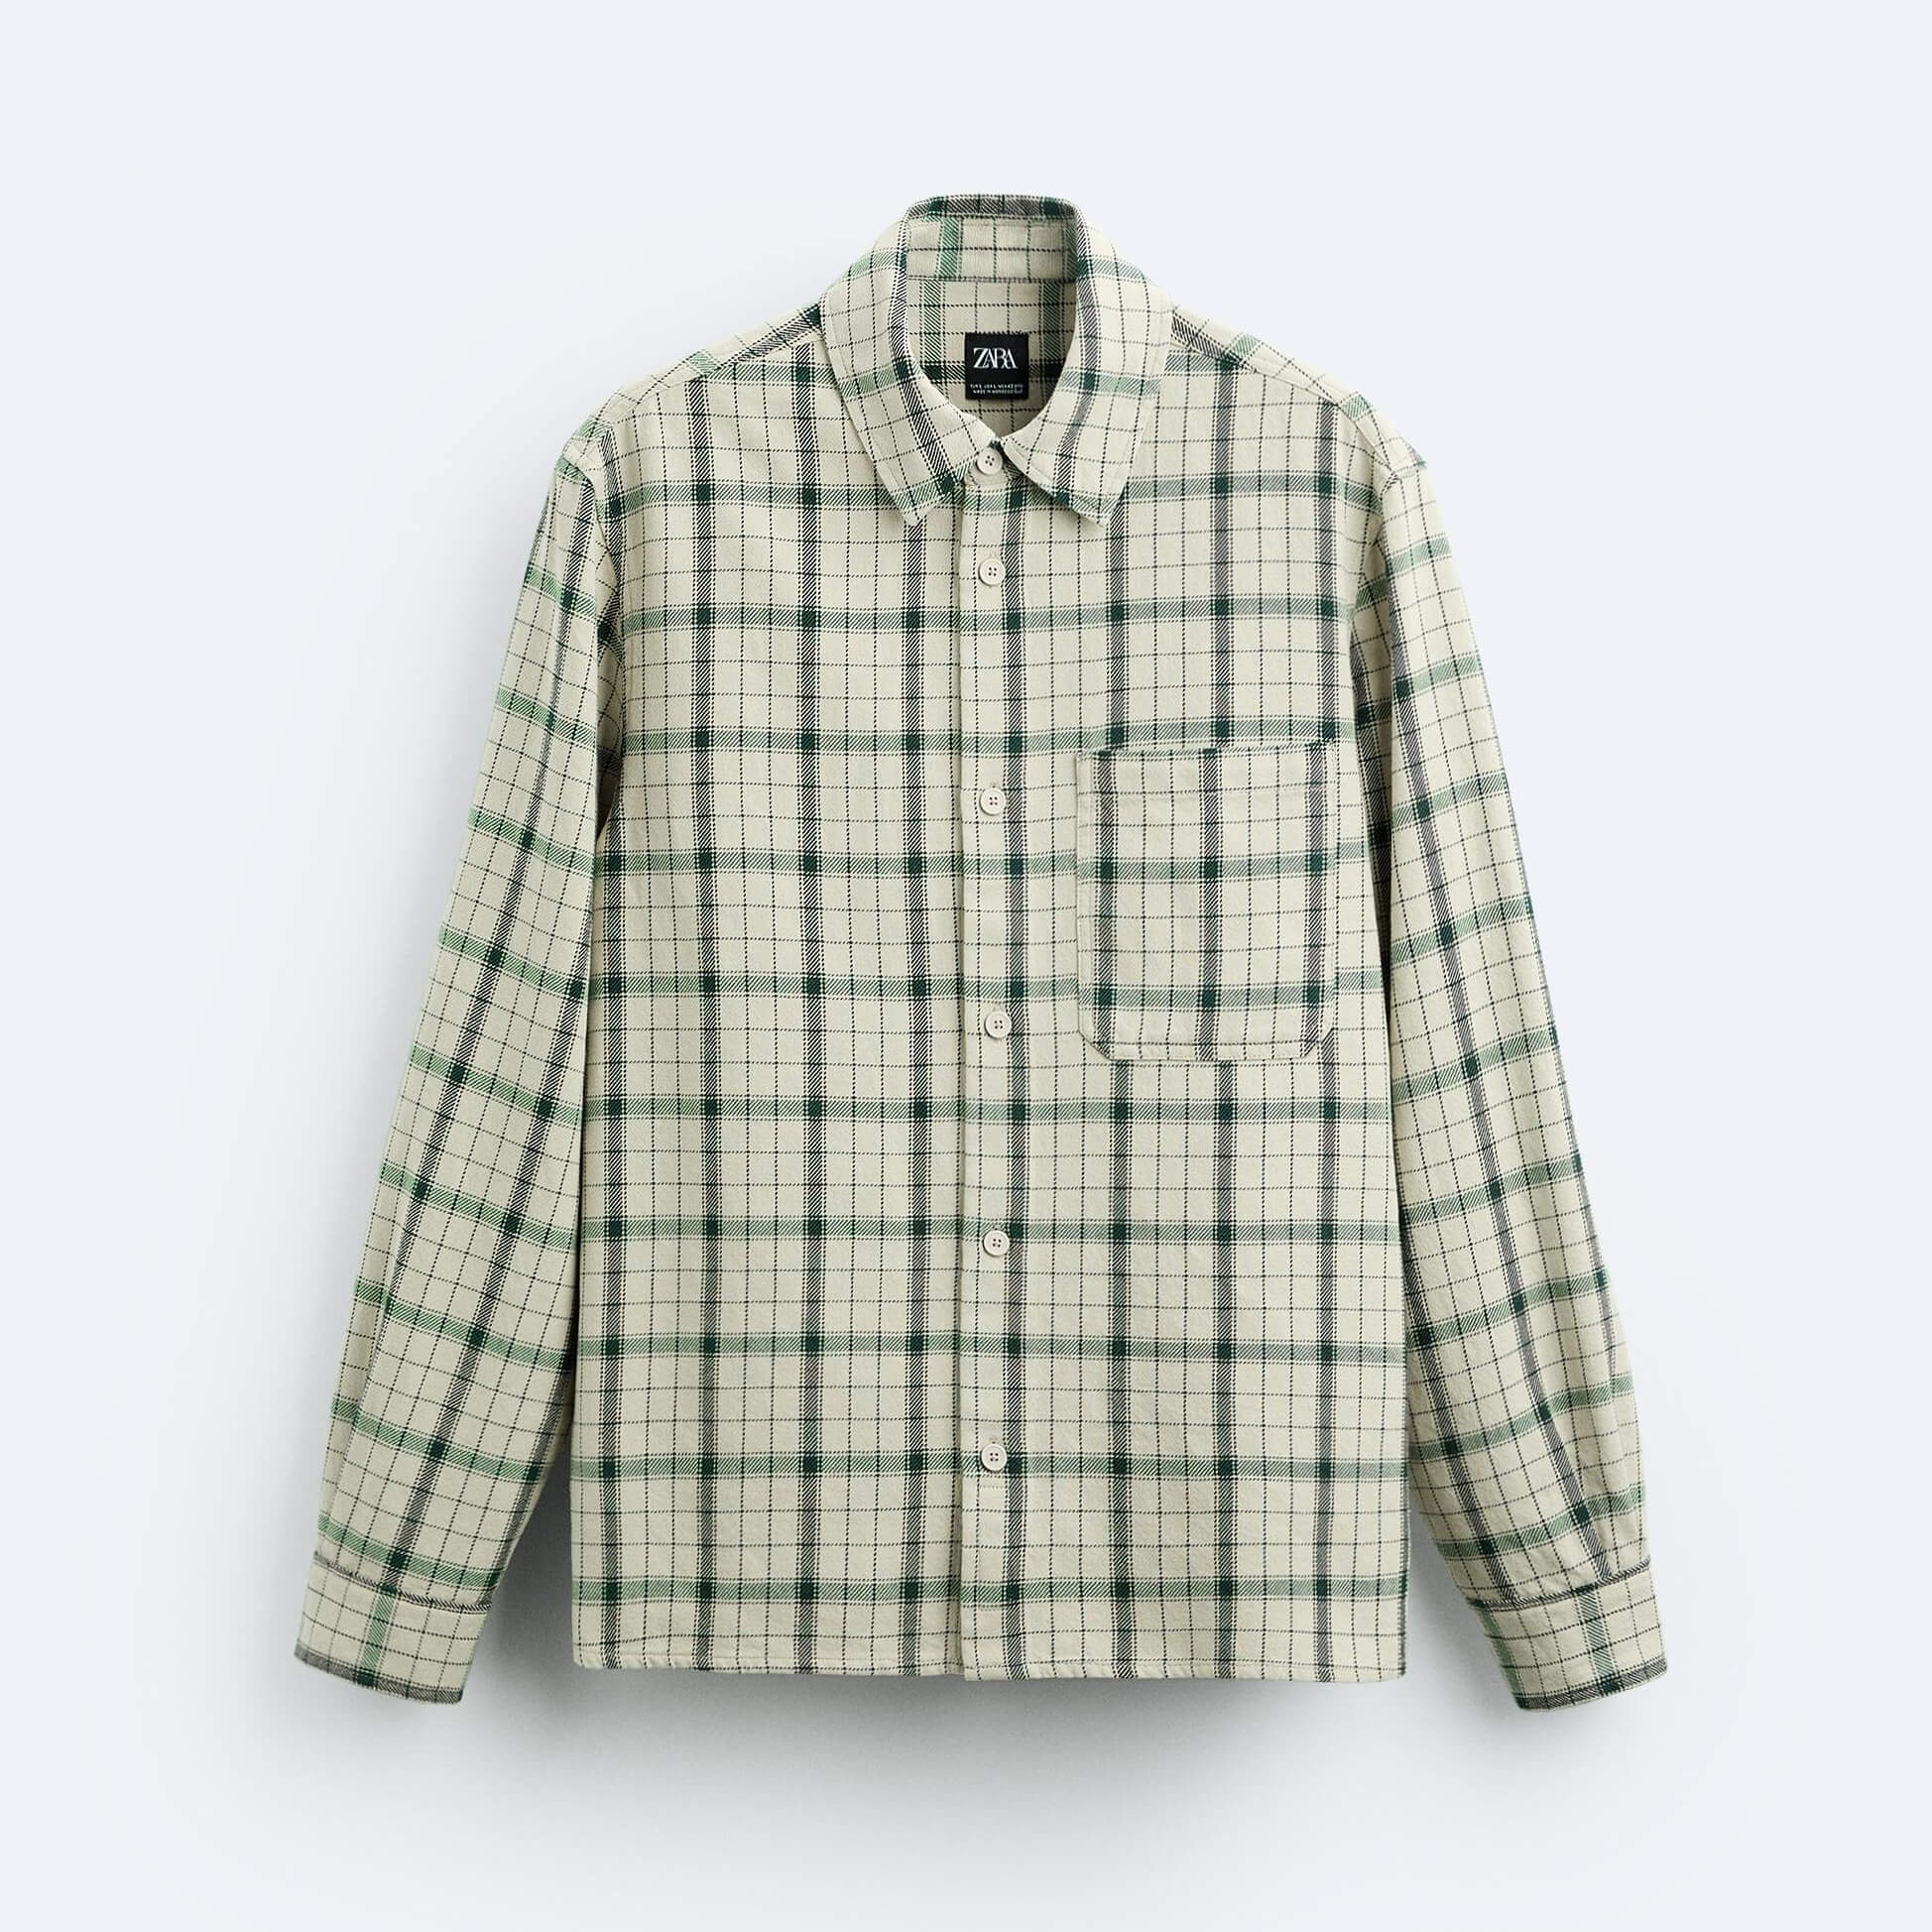 Рубашка верхняя Zara Check, светло-зеленый рубашка zara kids check зеленый черный